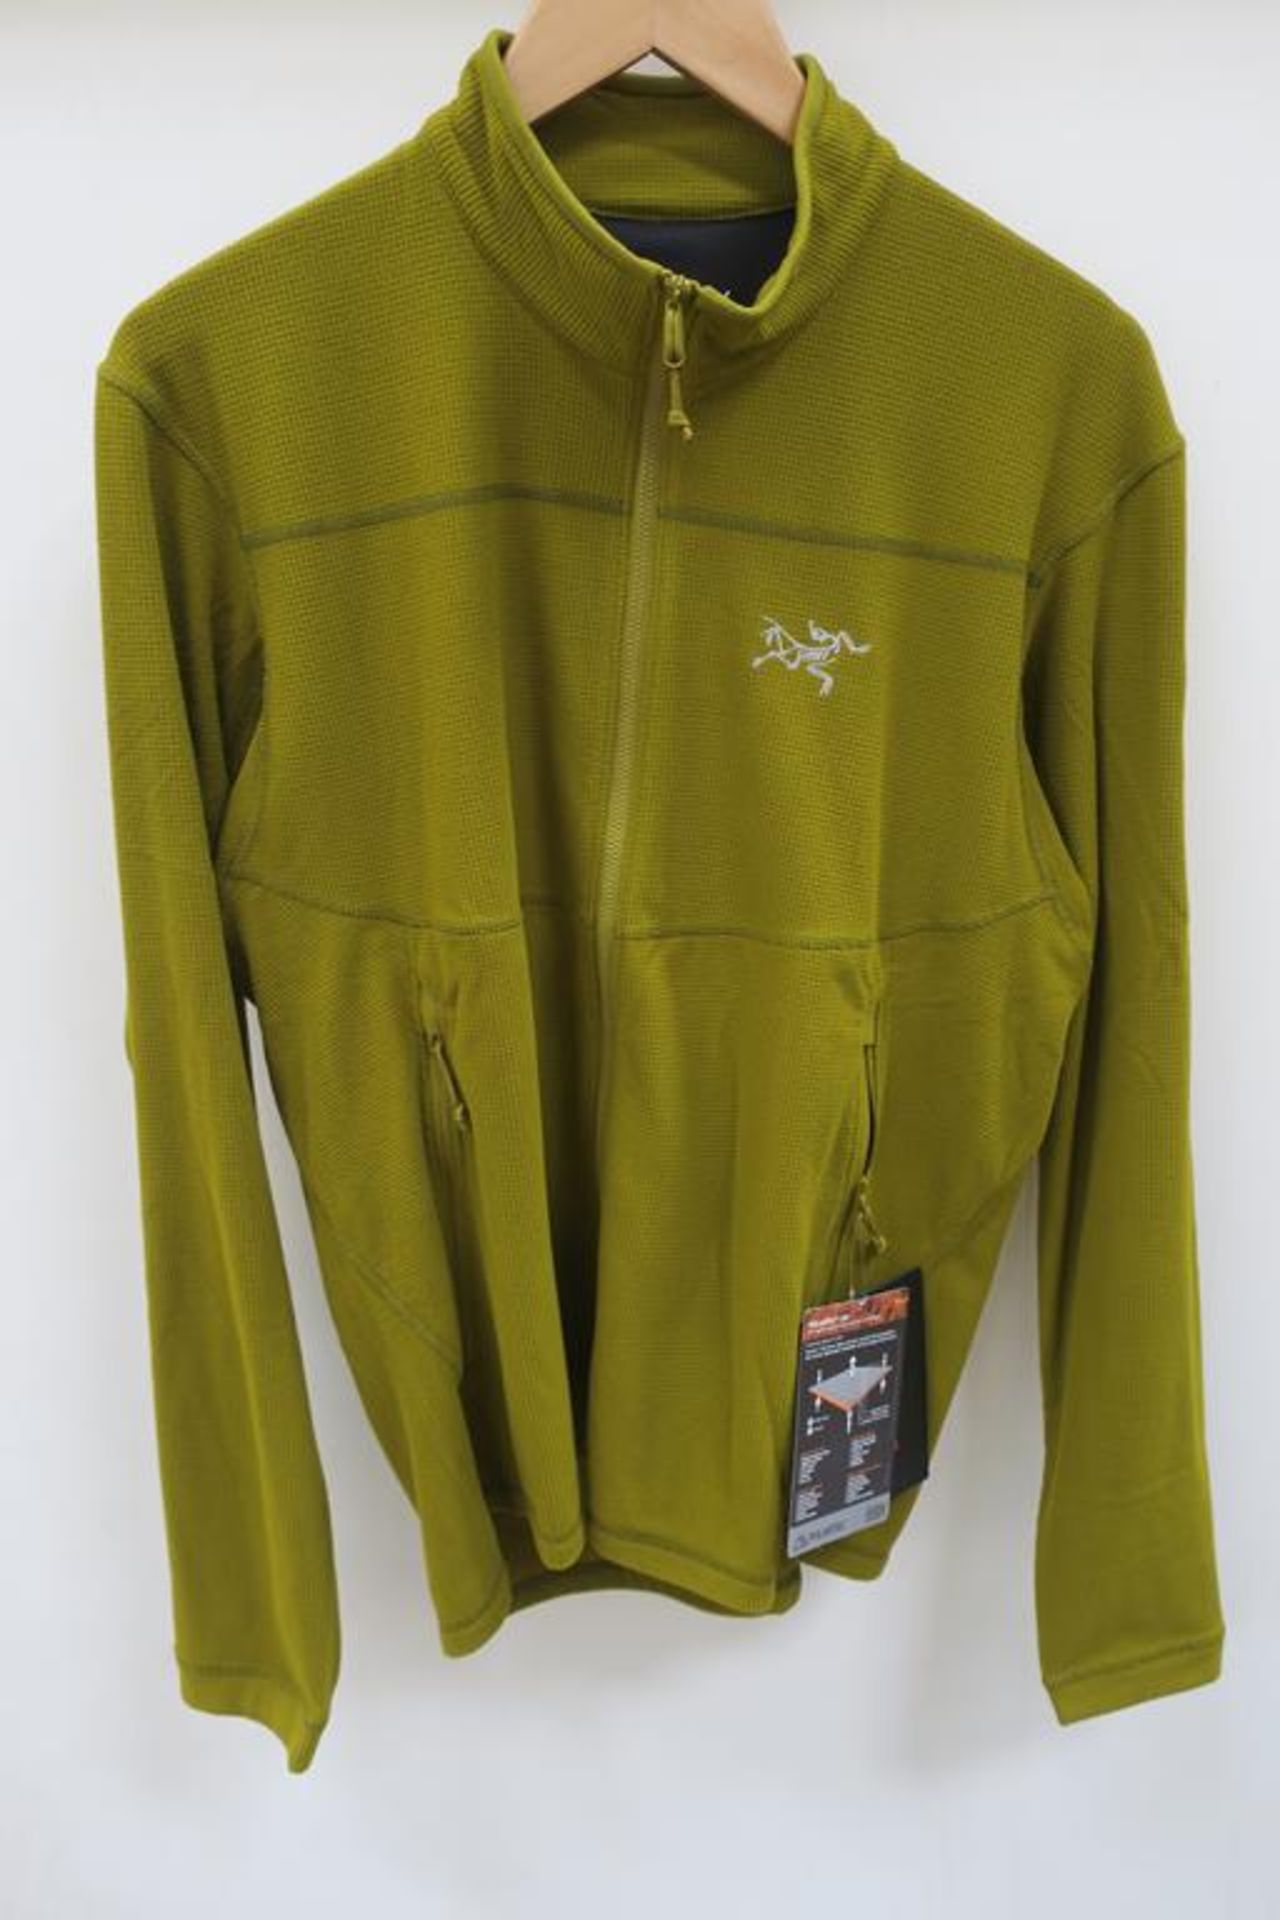 Arc'teryx Delta LT Zip Mens Jacket in Olive Amber size Medium